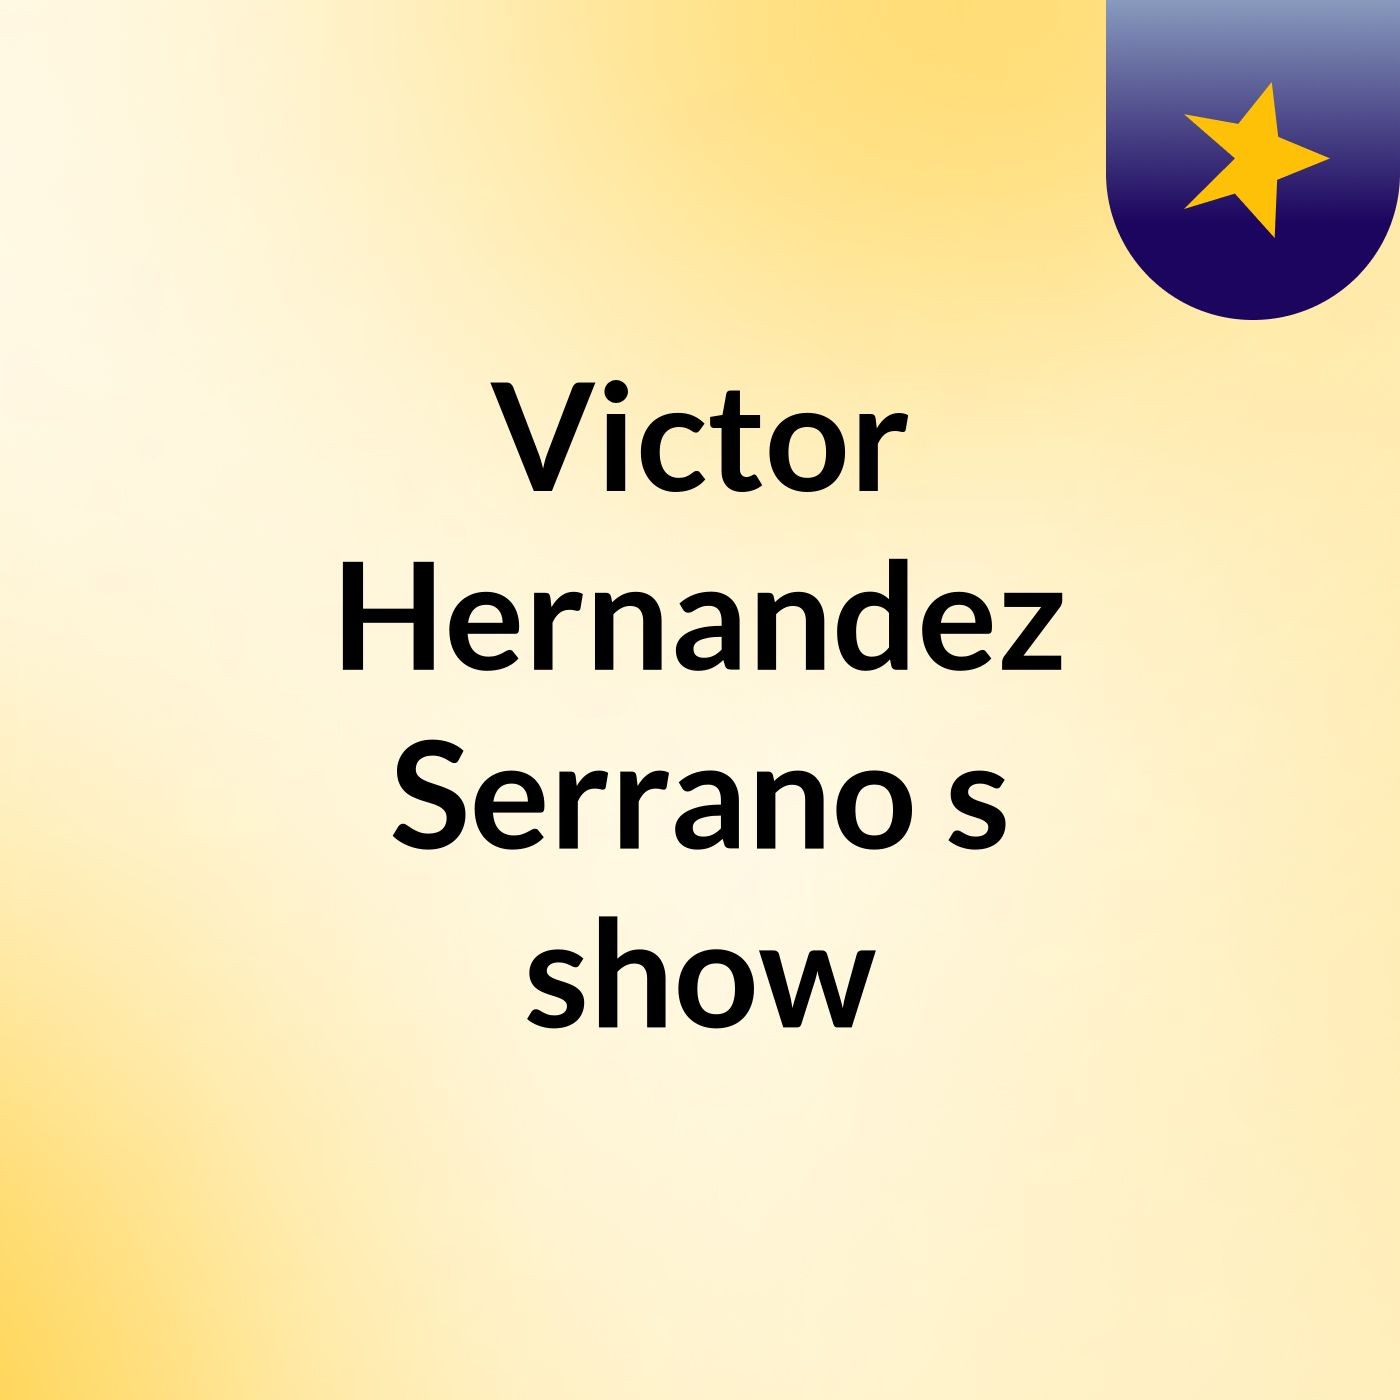 Victor Hernandez Serrano's show